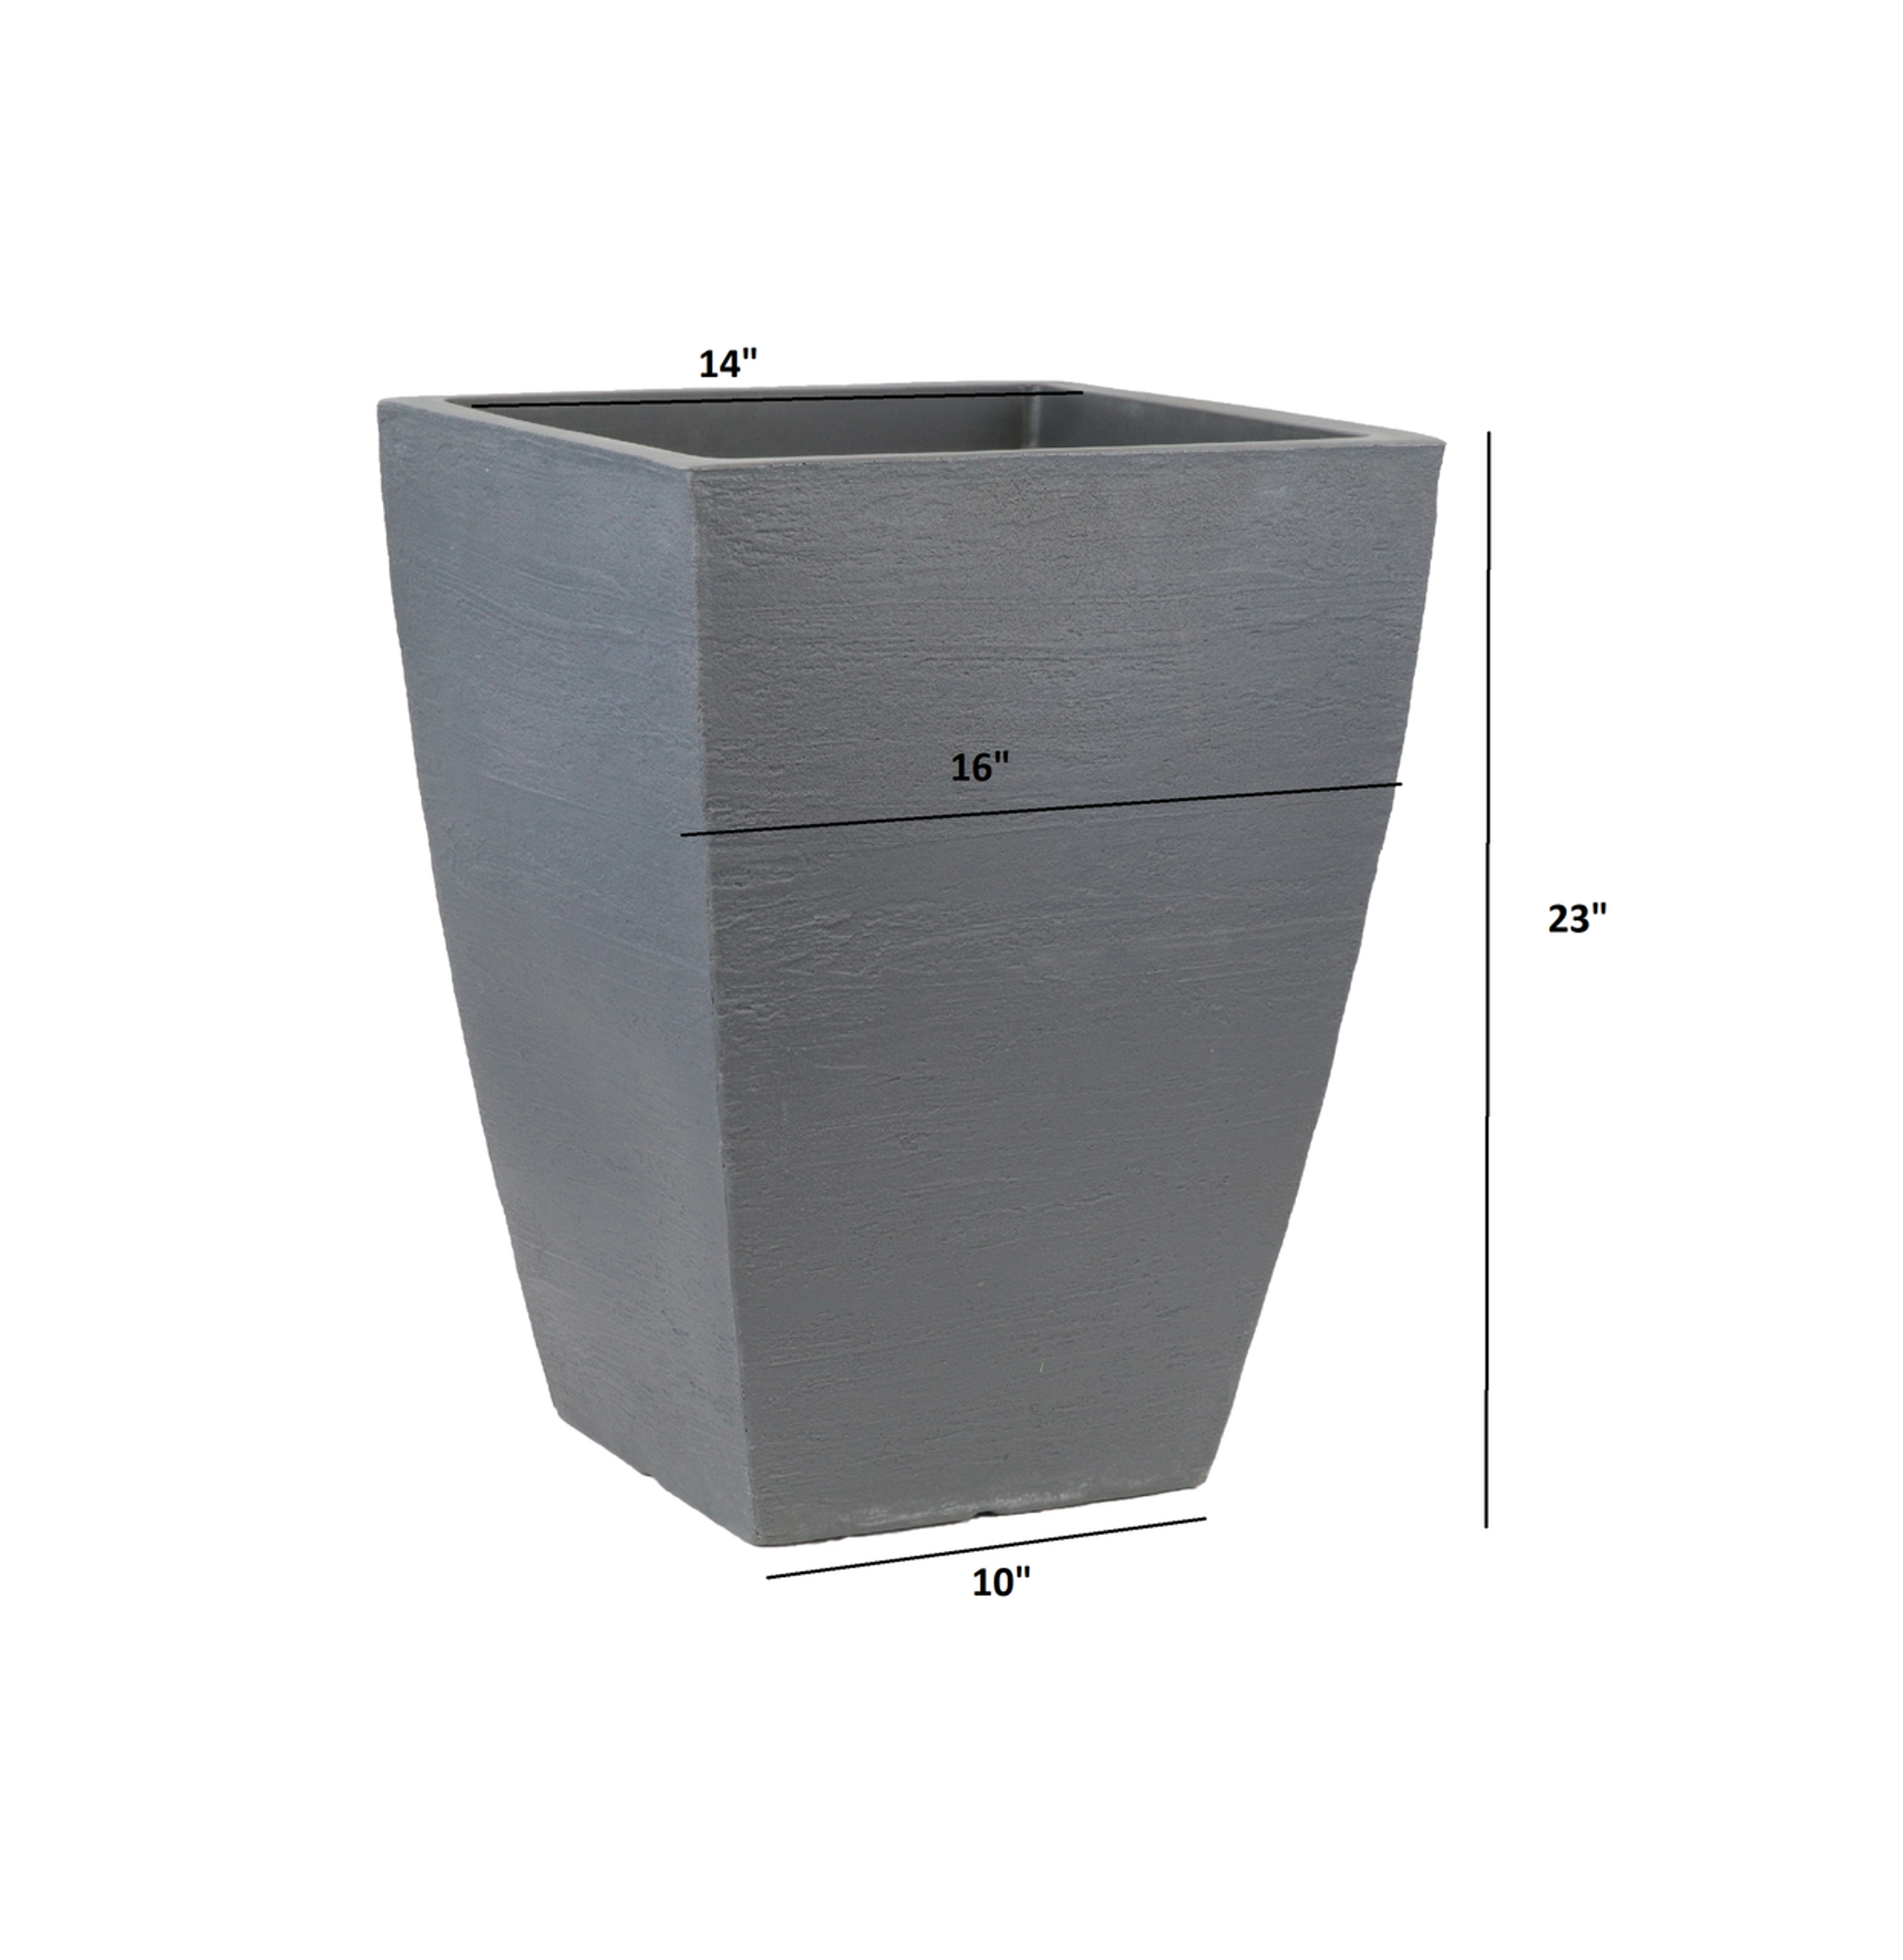 Tusco Modern Tall Slate Square Polyethylene Indoor/Outdoor Flower Pot Planter, Grey, 23"